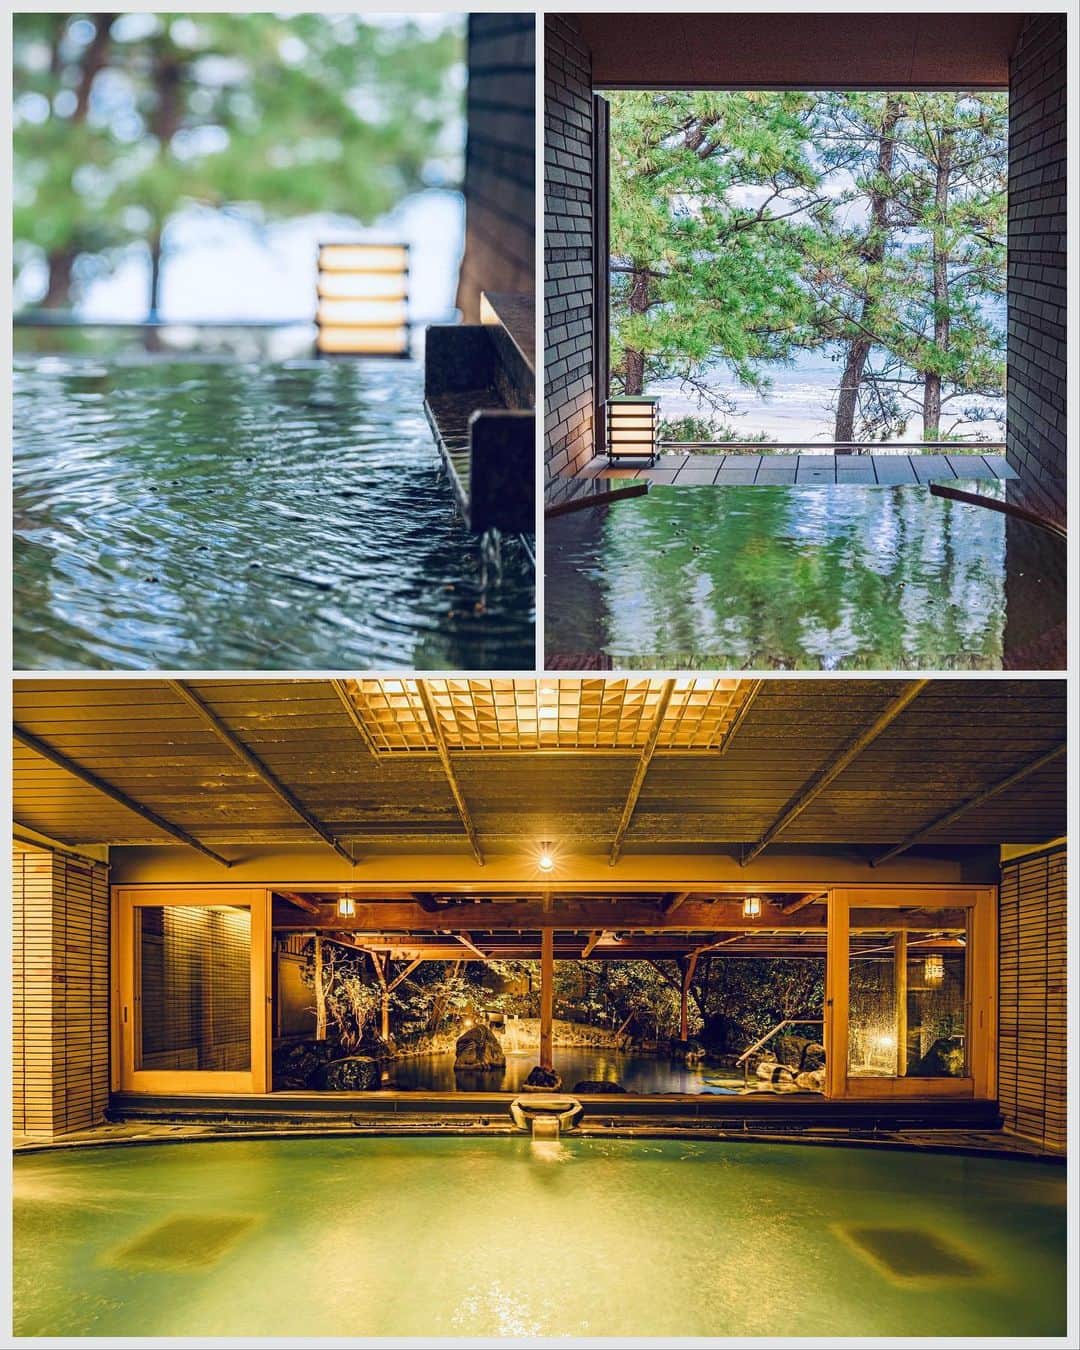 JAPAN TRIP 大人旅〜厳選の宿〜さんのインスタグラム写真 - (JAPAN TRIP 大人旅〜厳選の宿〜Instagram)「．@tokiichiyu 弓ヶ浜に佇む、ラグジュアリーな温泉宿。  客室は、100平米のメゾネットスイートや露天風呂付き客室など多彩。全室バルコニー付きです。食事は、伊勢海老や鮑、金目鯛など伊豆の新鮮な海鮮料理を和のテイストで味わえます。由緒ある癒しの湯に身を委ね、多彩な天然温泉で優雅なひとときをお楽しみください。  ＝DATA＝＝＝＝＝＝＝＝＝＝＝＝＝＝＝＝＝ 📍 季一遊 @tokiichiyu  ■ 静岡県賀茂郡南伊豆町湊字川口902-1 ■ 40室 ■ IN 15:00～／OUT 11:00  ■ 2名：42,000円～（夕朝食付） ※目安料金です。料金は施設に確認ください。 ＝＝＝＝＝＝＝＝＝＝＝＝＝＝＝＝＝＝＝＝＝  🔸天然温泉 🔸源泉掛け流し 🔸大浴場 🔸露天風呂 🔸貸切露天風呂 🔸子供可 🔸ペット不可  ︎✈︎−−−−−−−−−−−−−−−−−−−−−−−−−−−−−✈︎ 　気になった方は保存しておくと便利です👍  　泊まったことがあれば、体験談＆感想等、 　コメント欄に書いて頂けると嬉しいです🙇‍♂️ ✈︎−−−−−−−−−−−−−−−−−−−−−−−−−−−−−✈︎  #伊豆ホテル #伊豆旅行 #伊豆観光 #南伊豆 #温泉行きたい #絶景 #絶景露天風呂 #露天風呂 #露天風呂付き客室 #高級旅館 #onsen #hotel #izu」4月5日 7時00分 - otonatabi_jpn